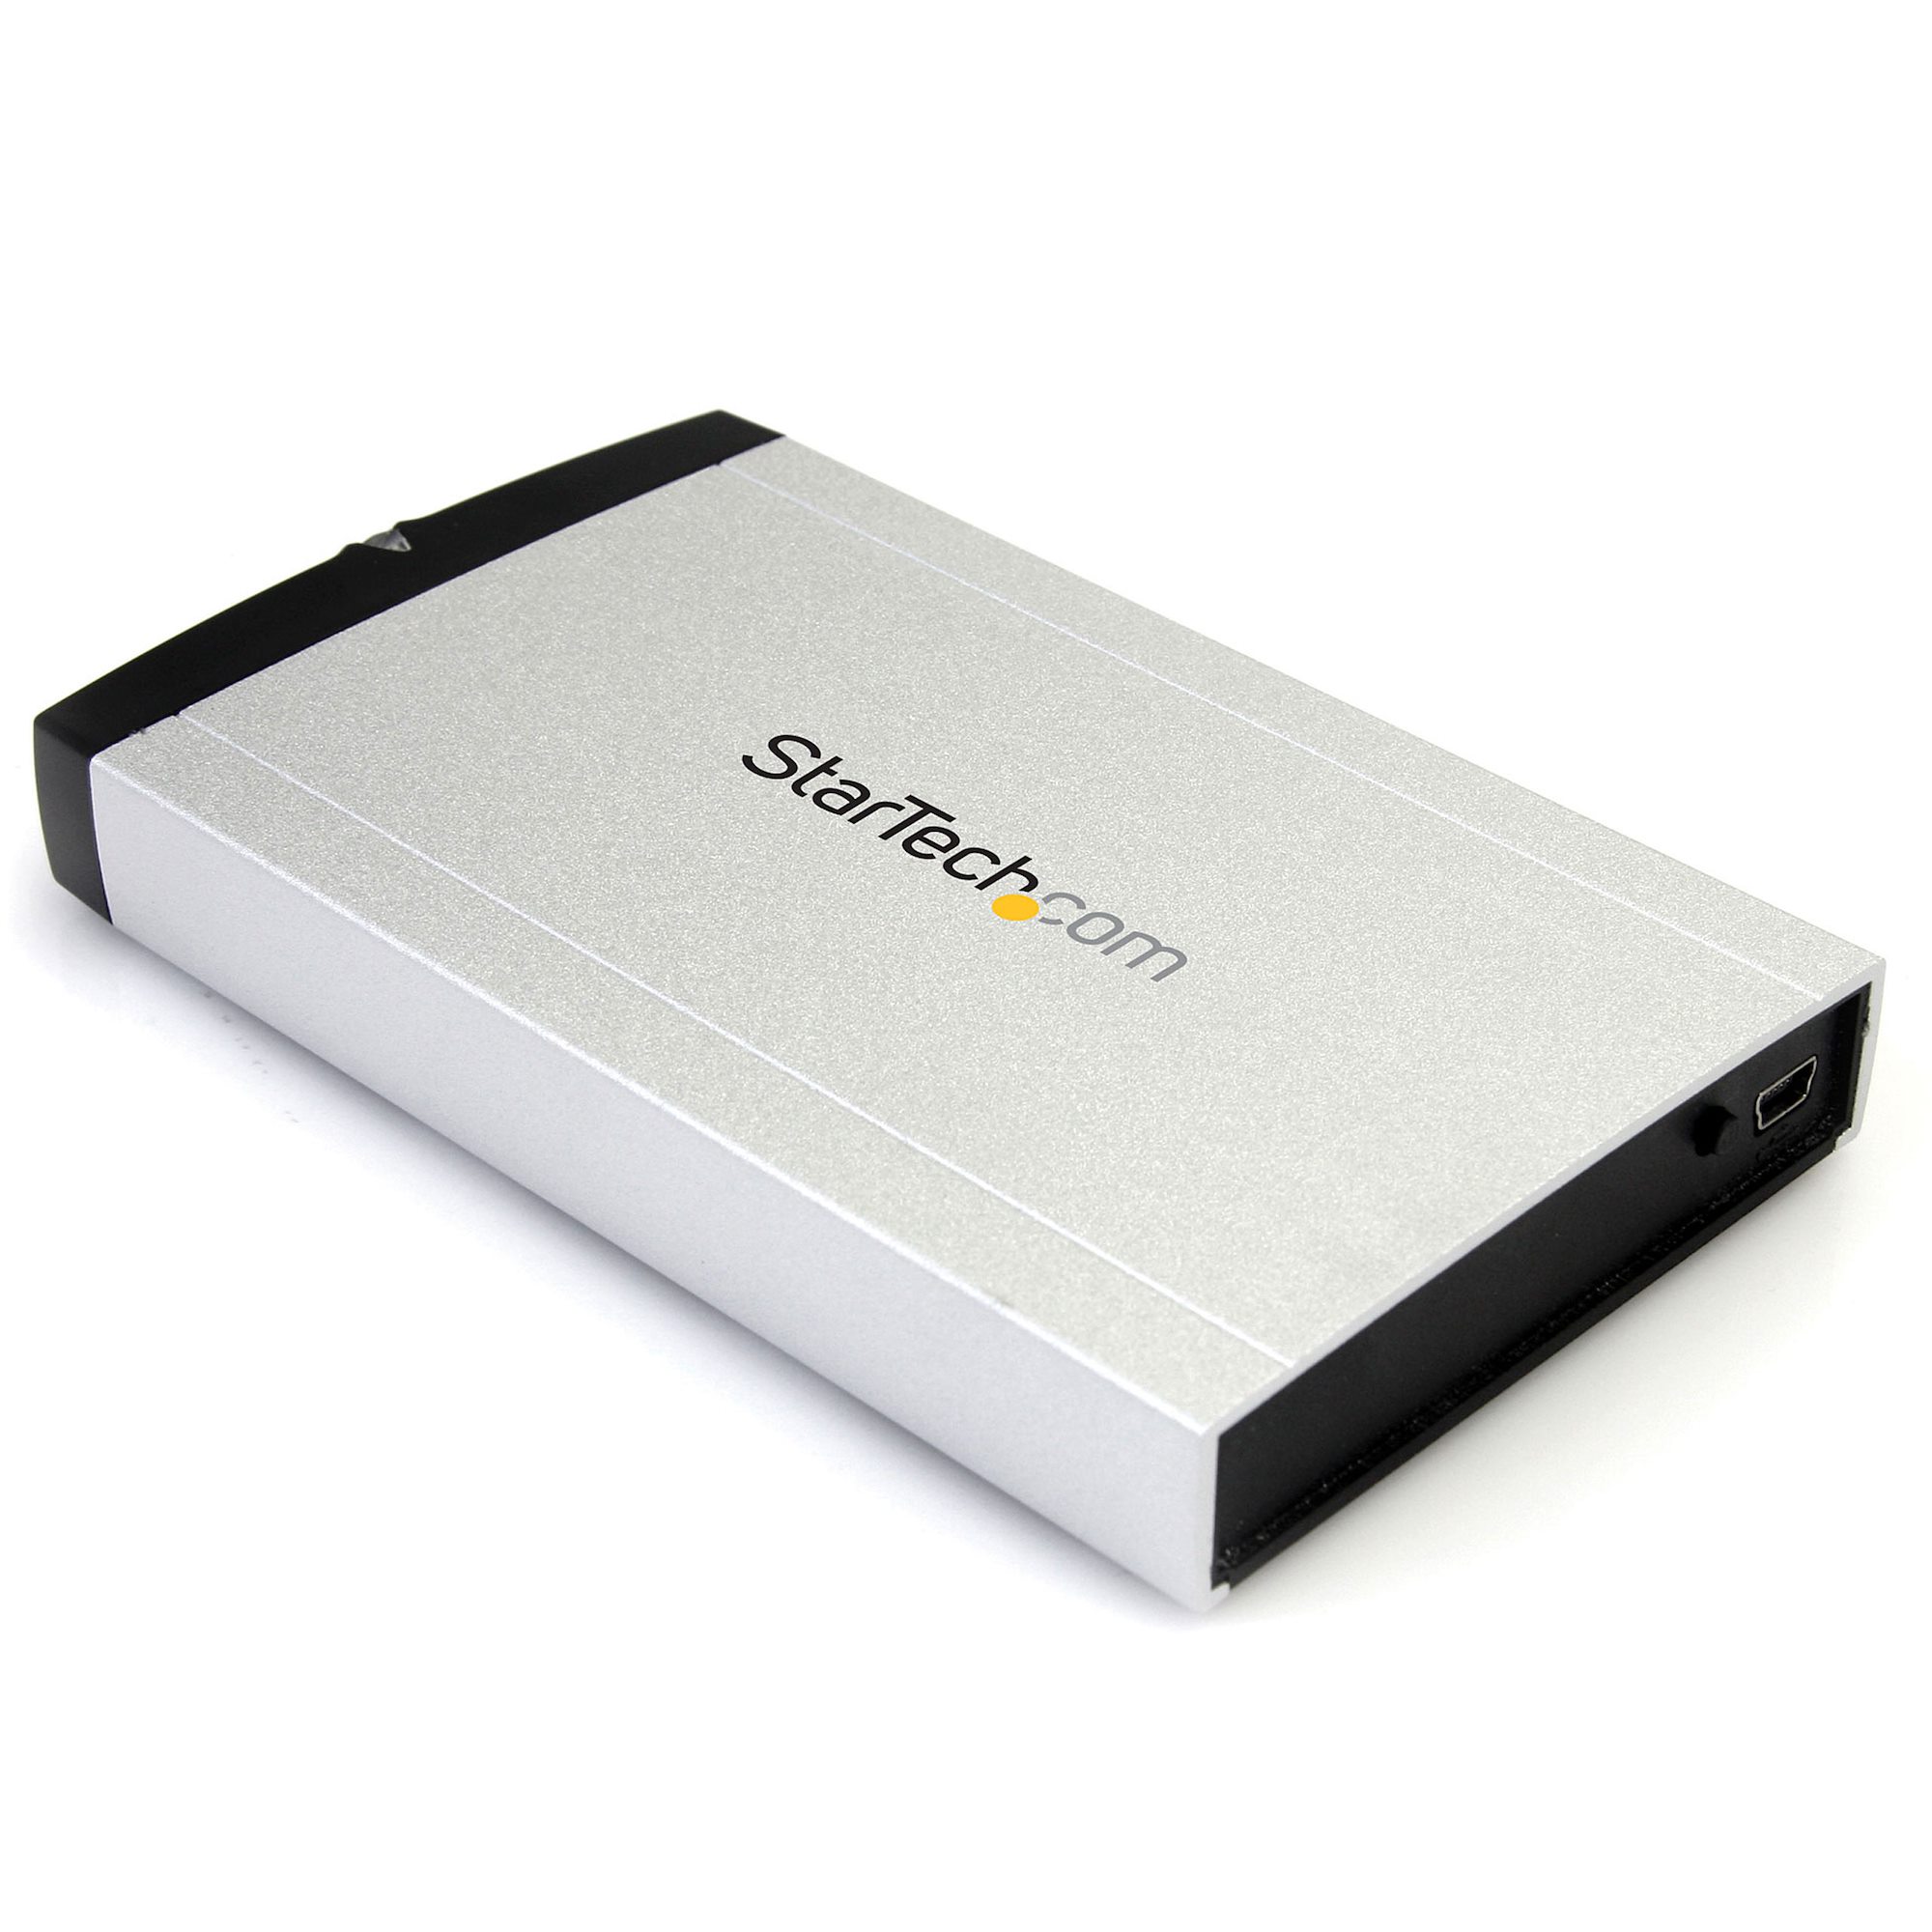 2.5 Tool-less USB IDE SATA HDD Enclosure - Cajas para unidades StarTech.com Europa